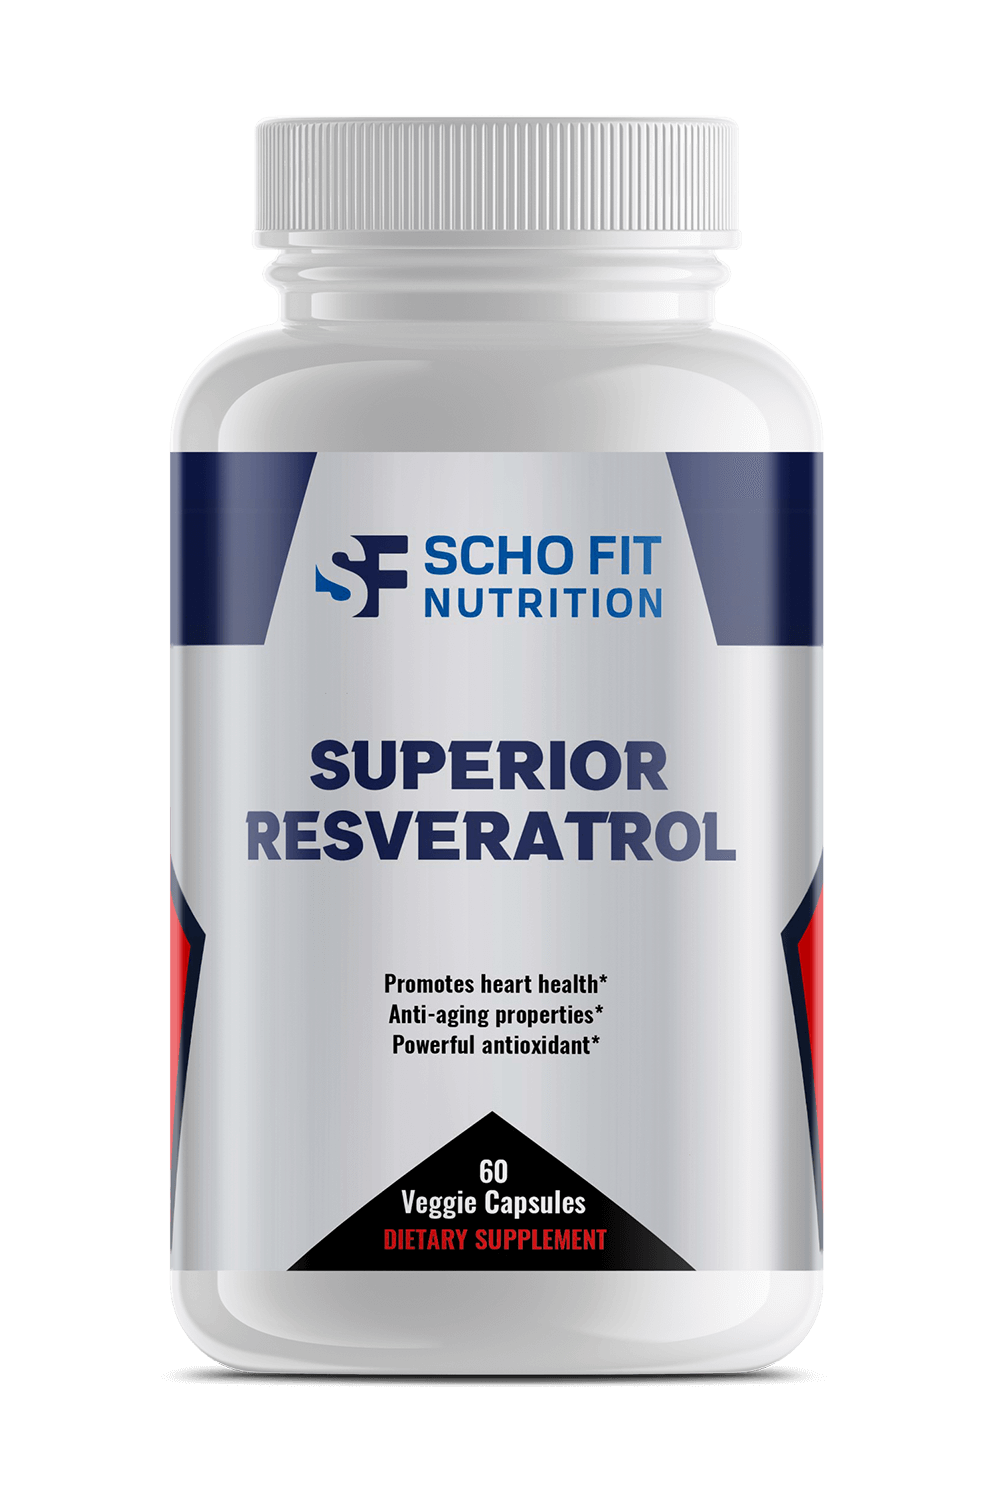 Superior Resveratrol